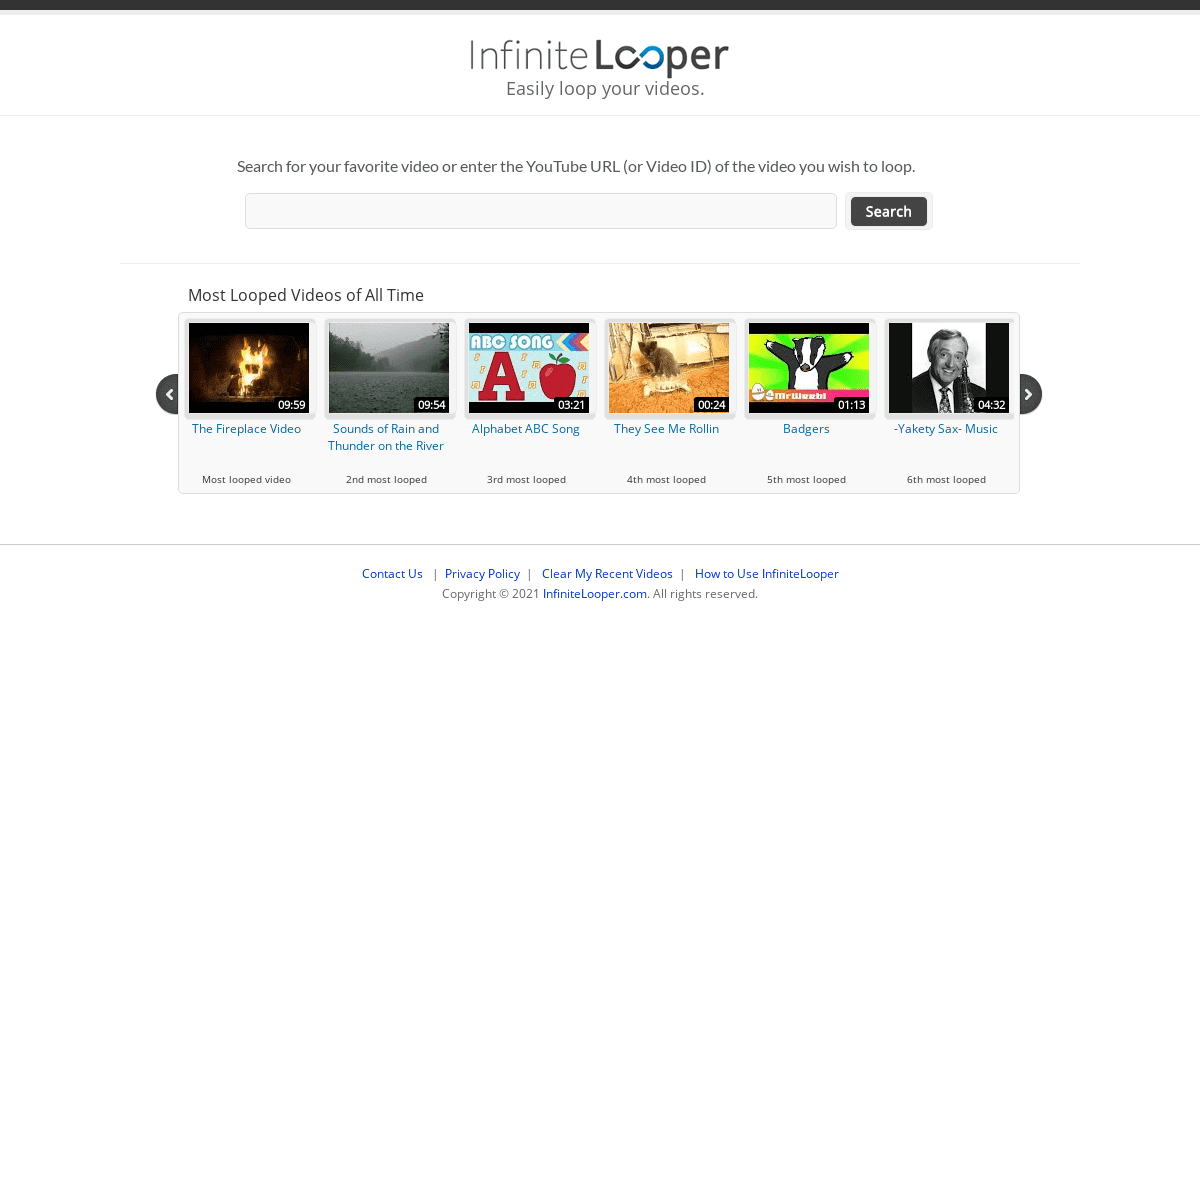 A complete backup of https://infinitelooper.com